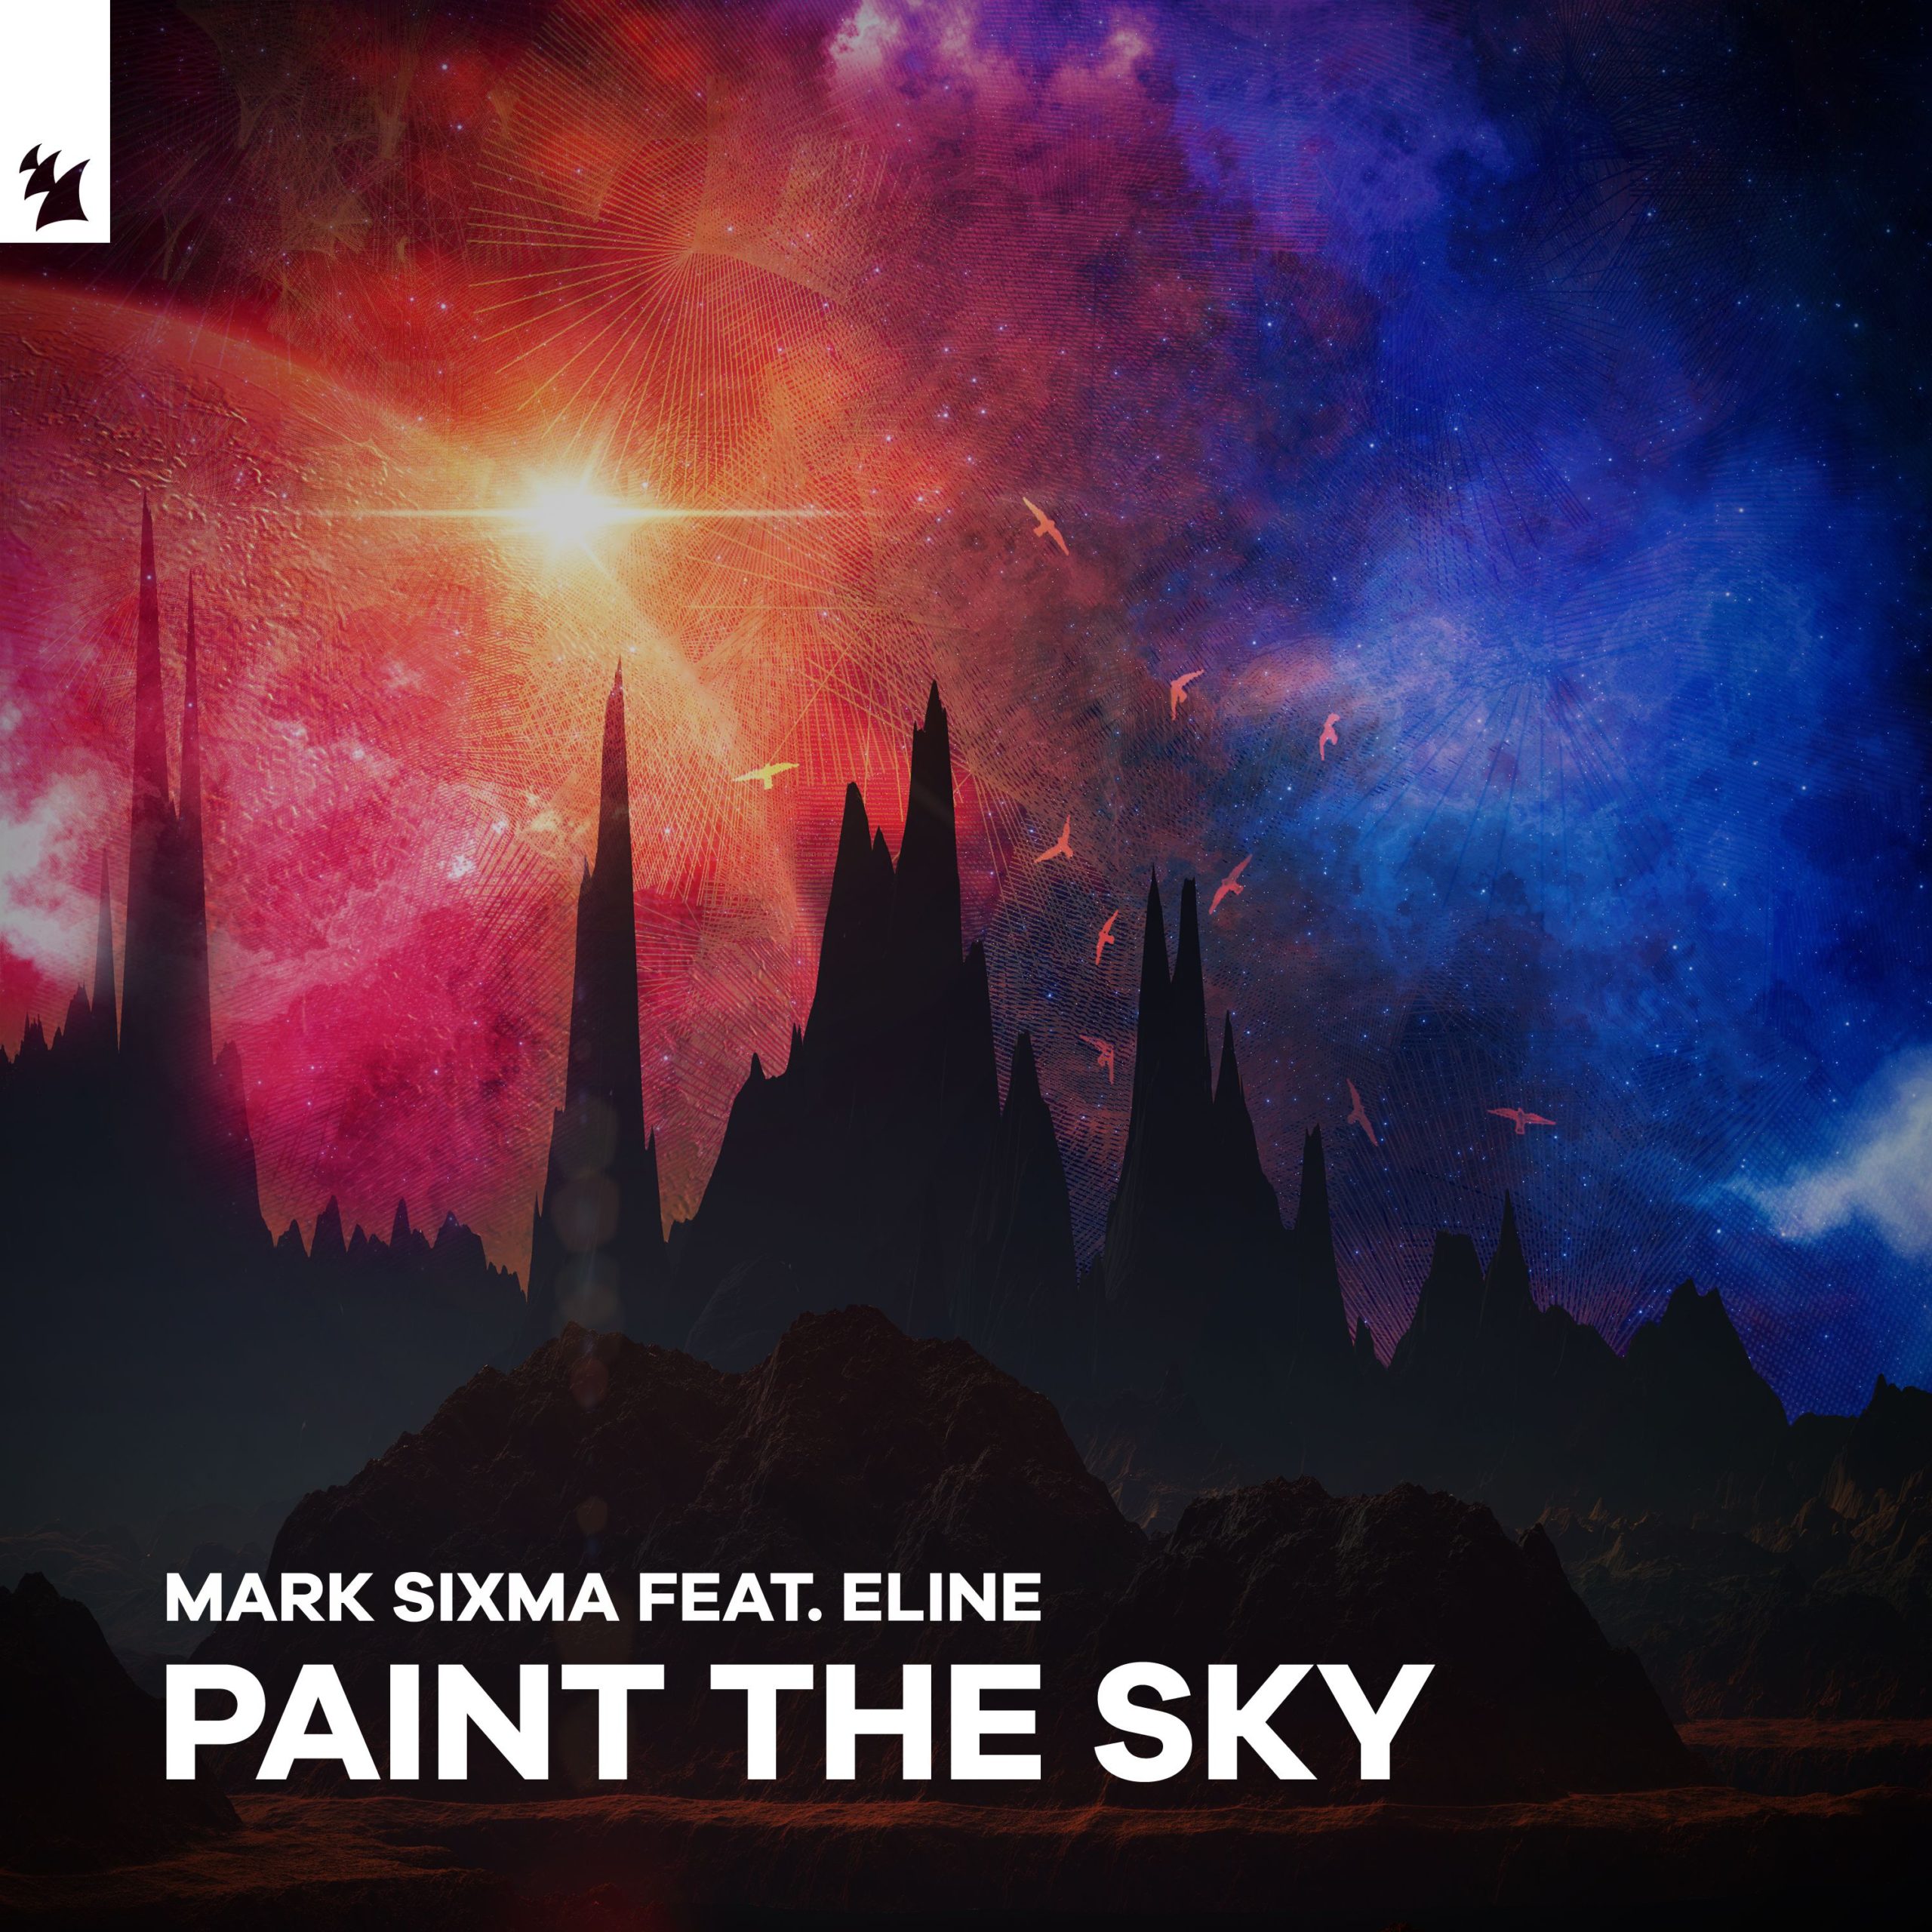 Mark Sixma feat. Eline presents Paint The Sky on Armada Music